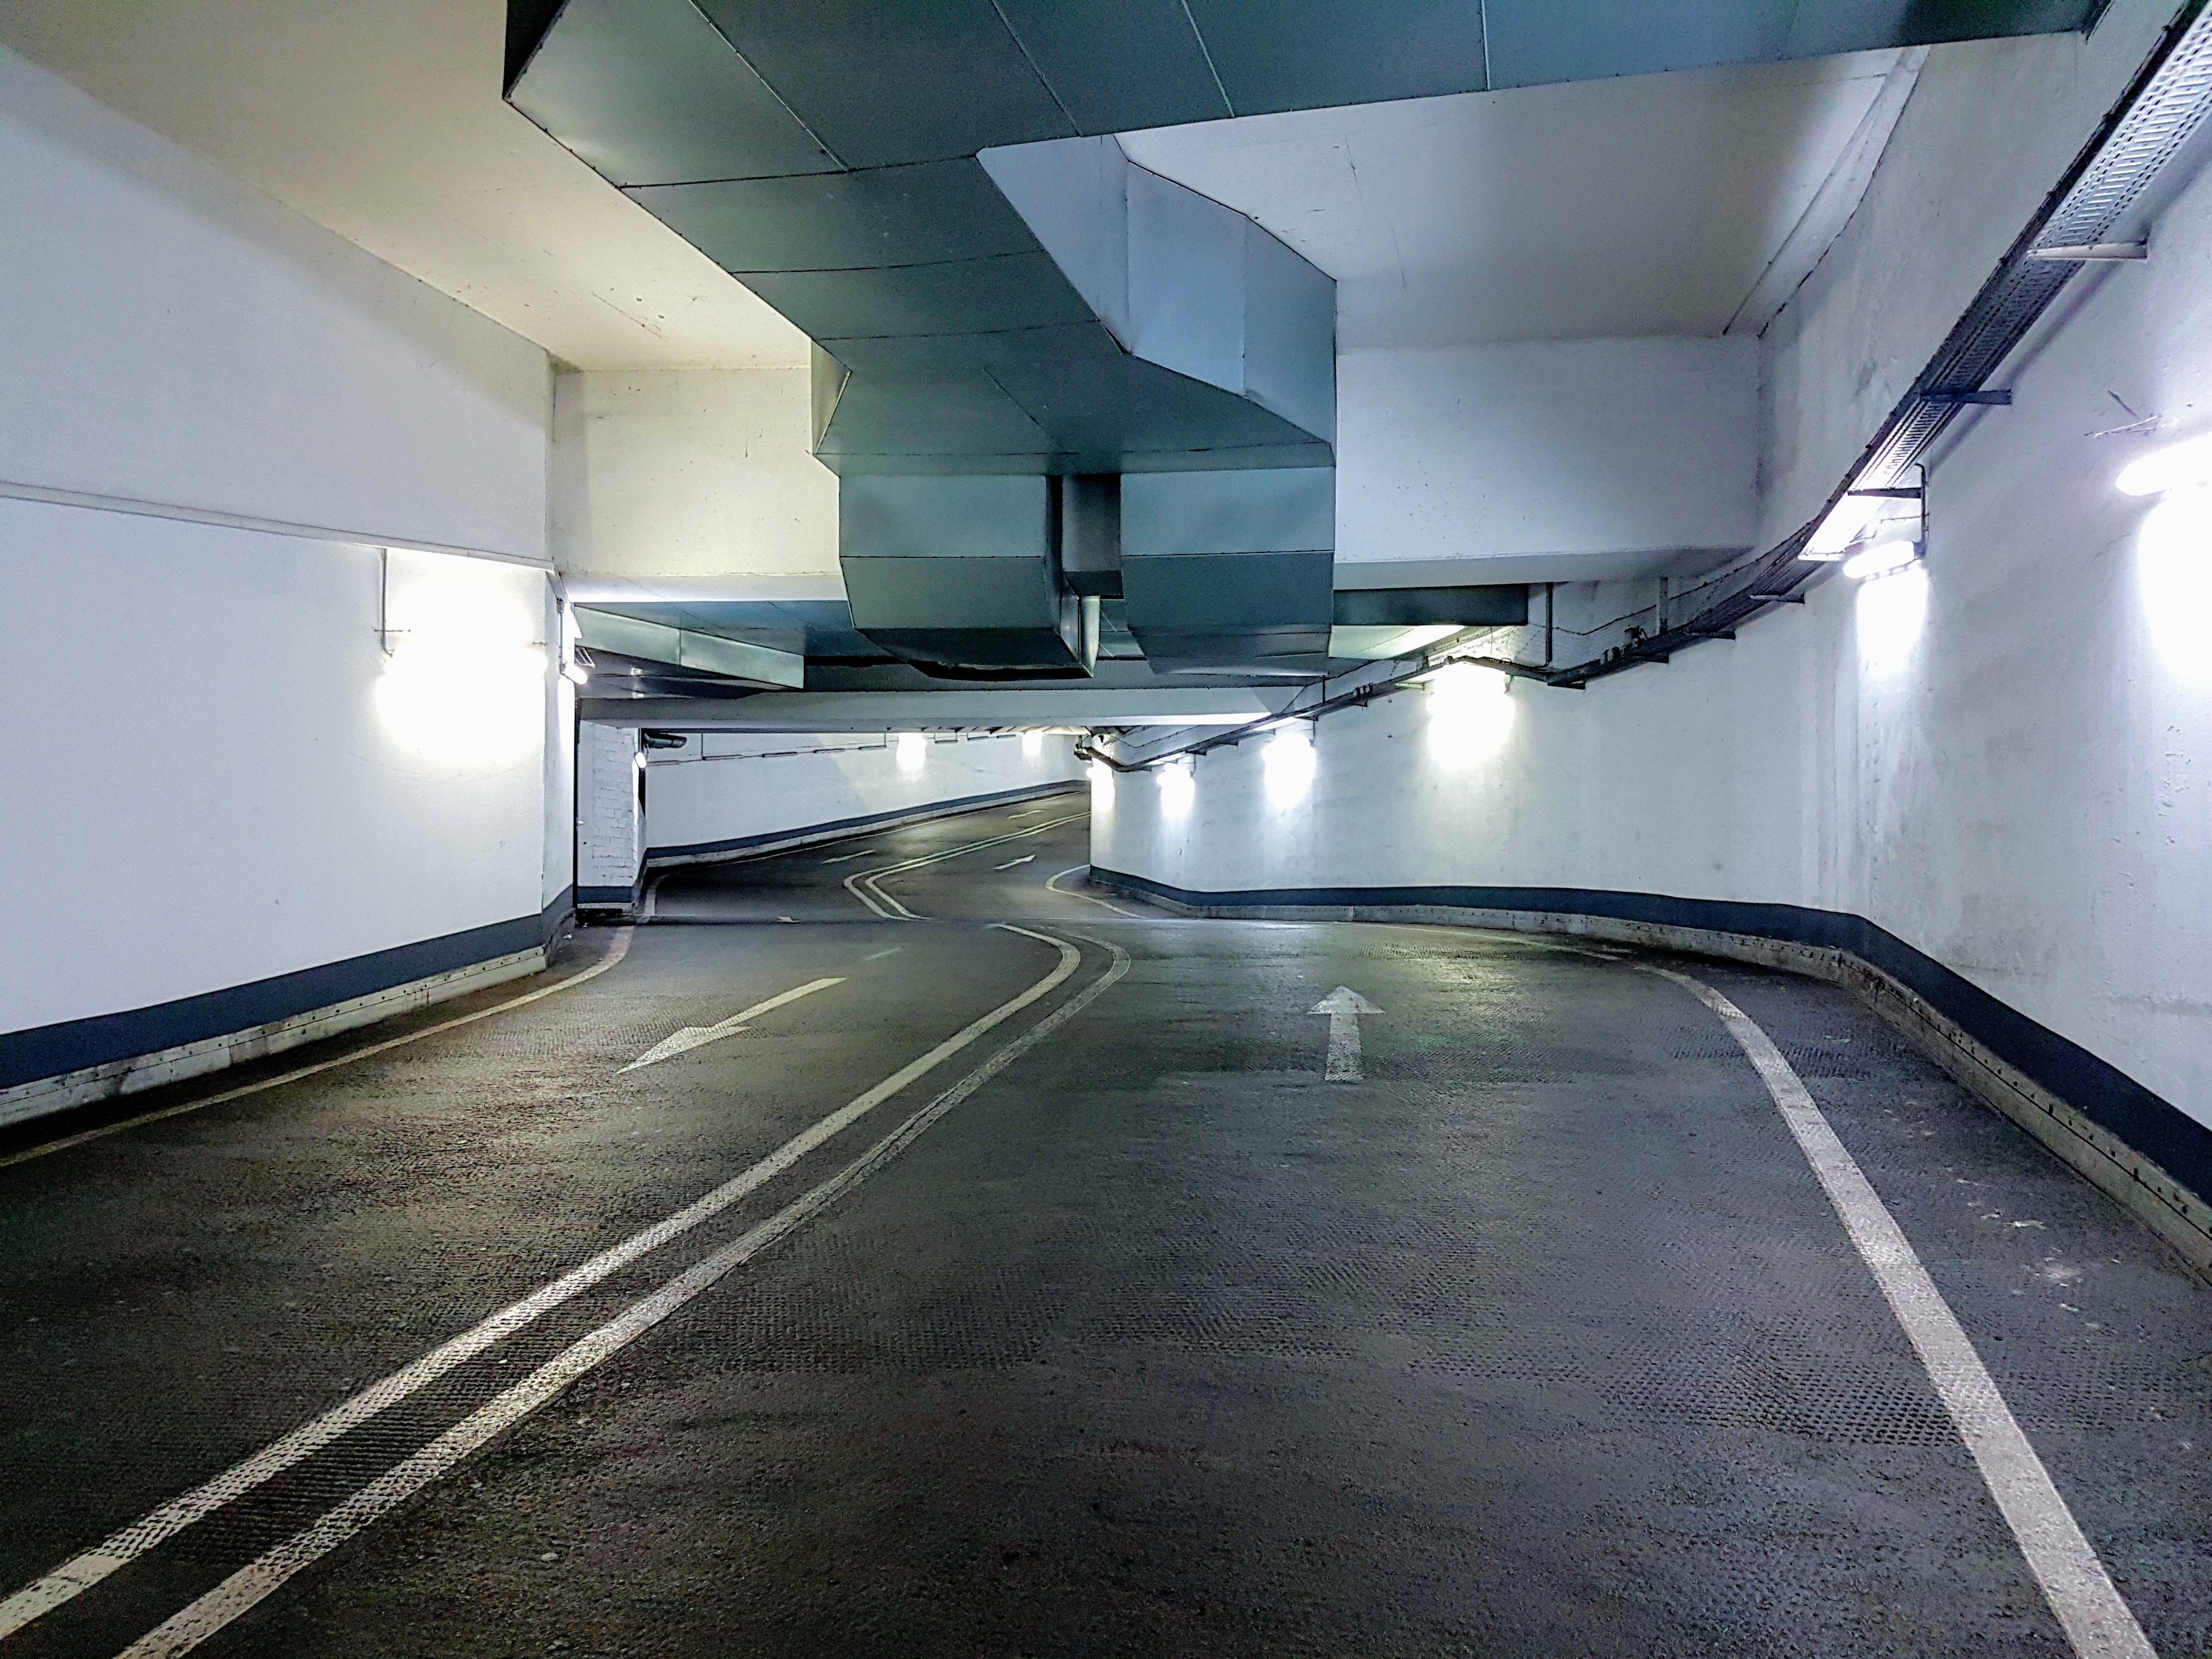 Optimally illuminated garage: Safety & aesthetics combined